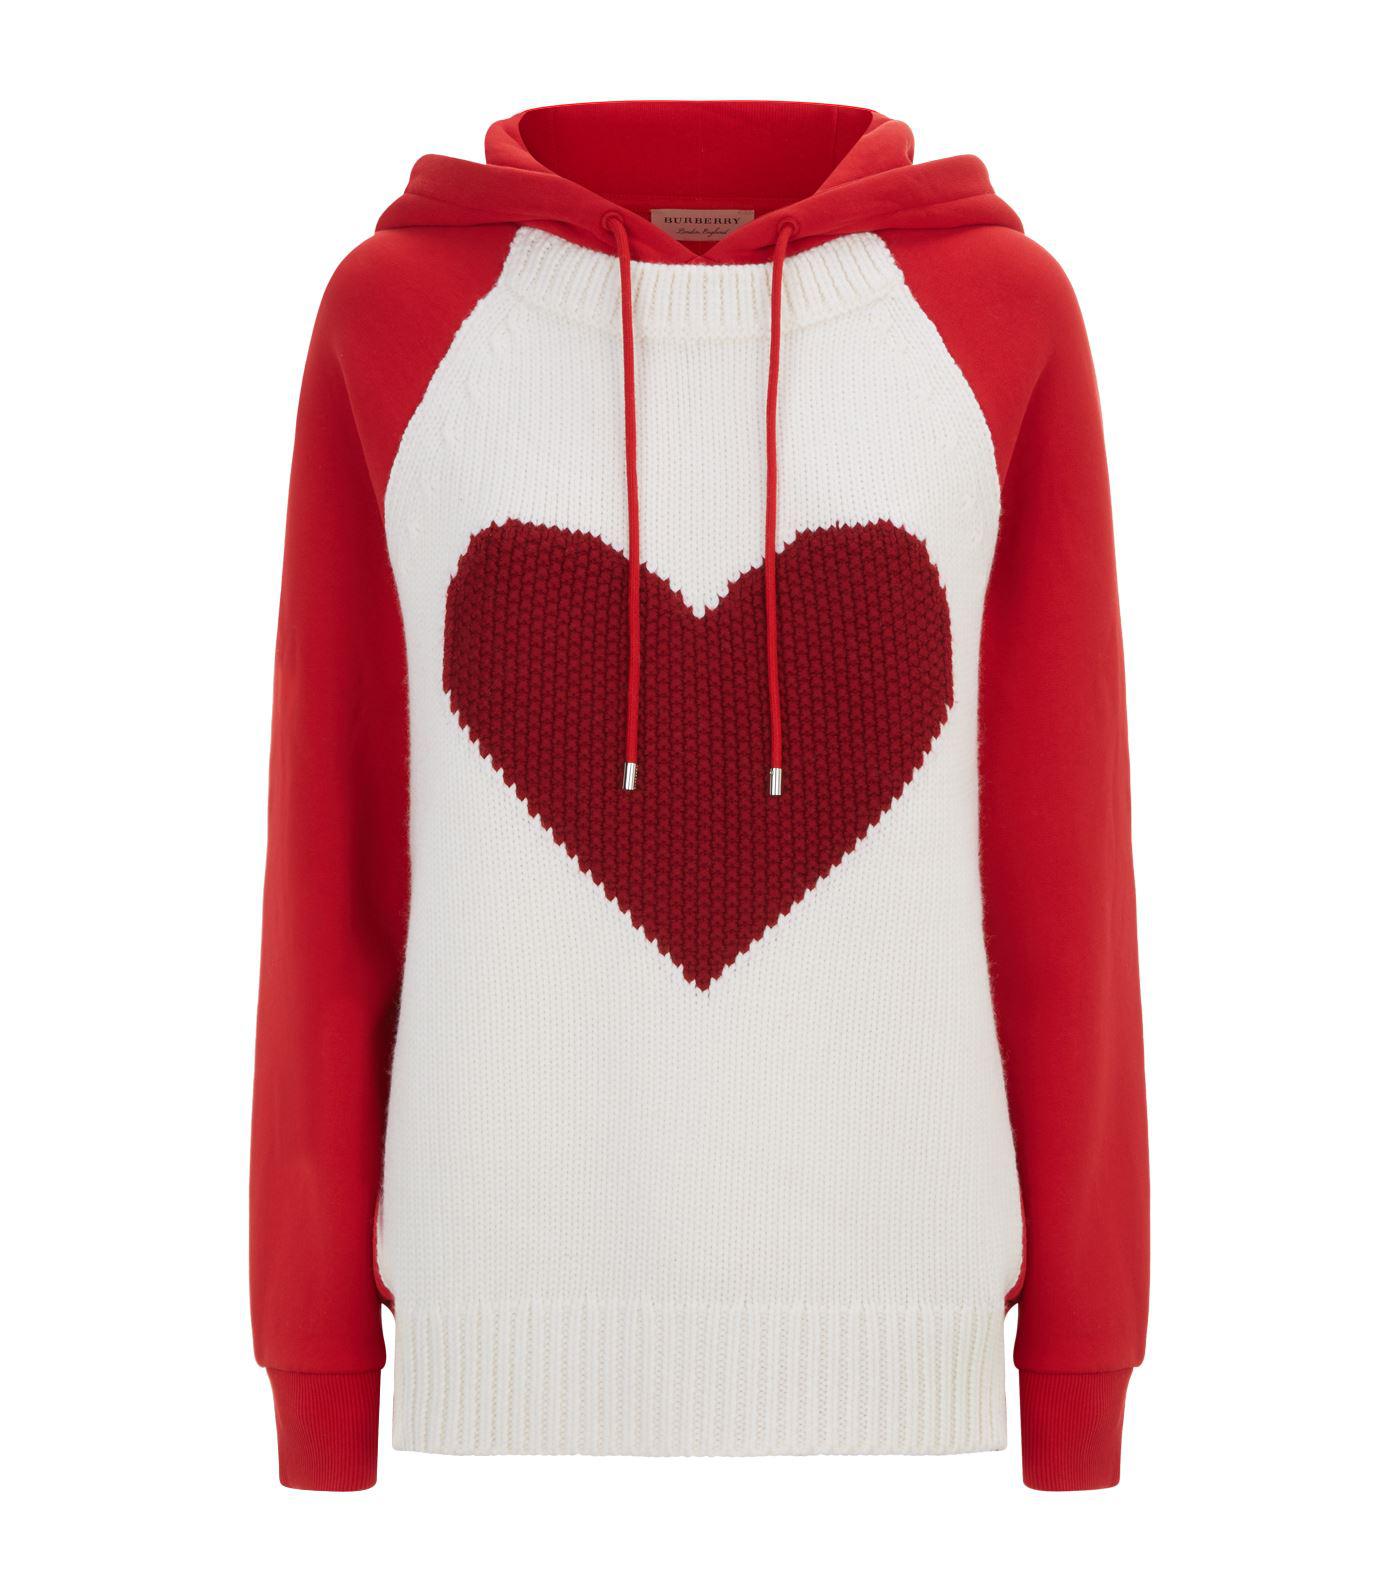 burberry heart sweater